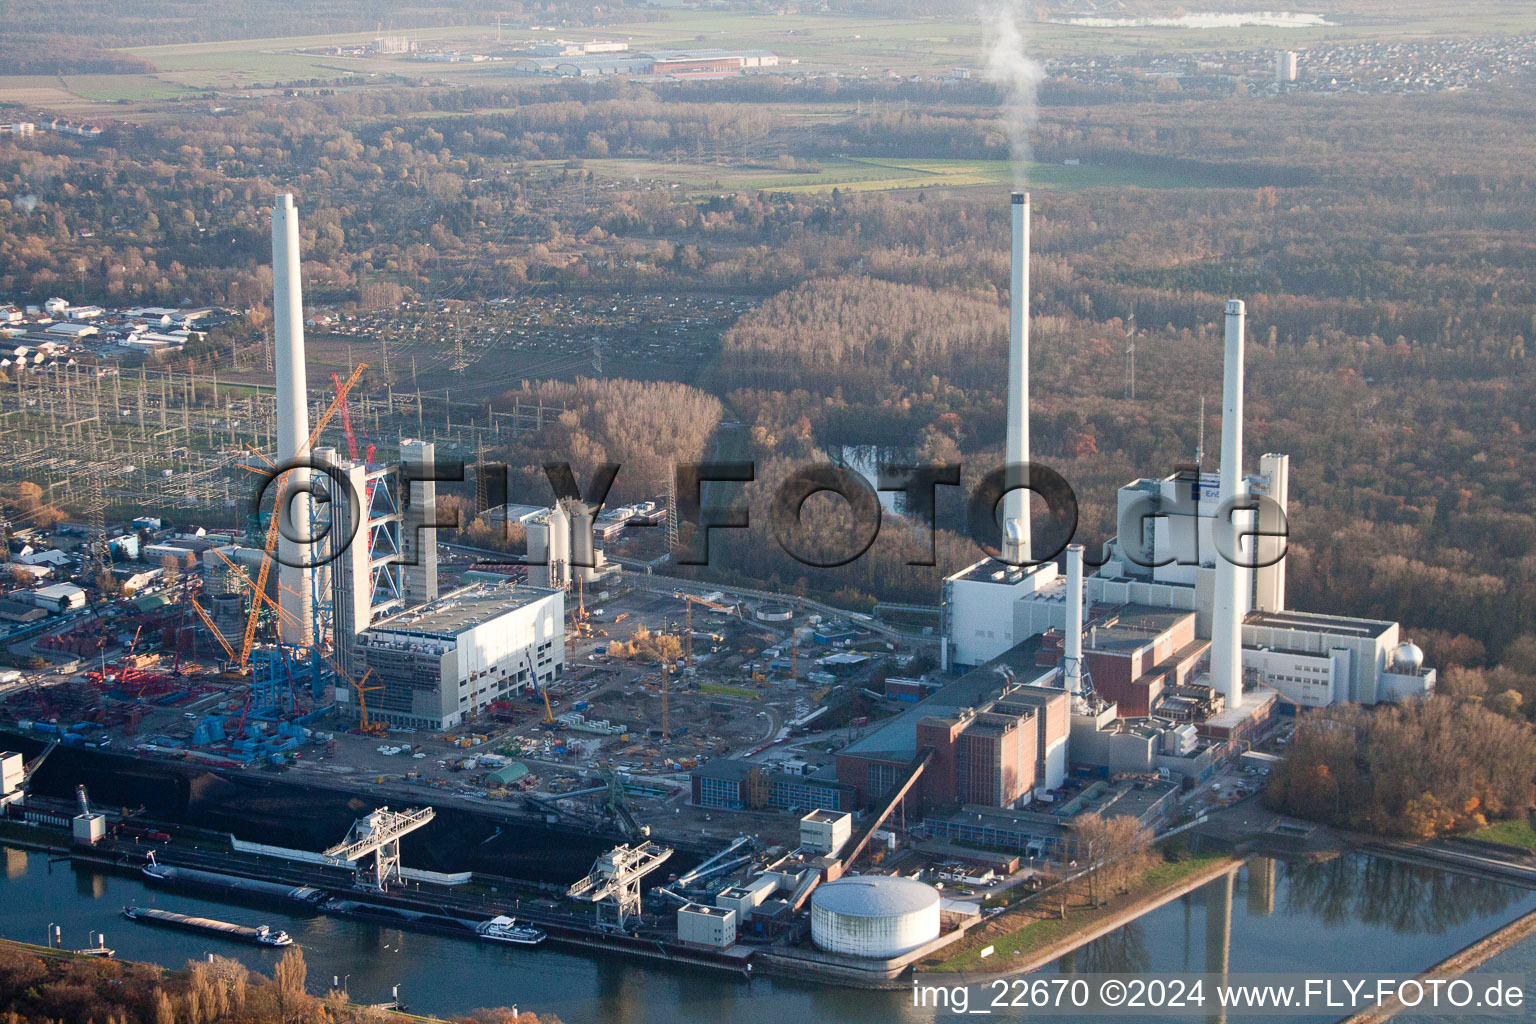 Bird's eye view of EnBW power plant in the district Rheinhafen in Karlsruhe in the state Baden-Wuerttemberg, Germany